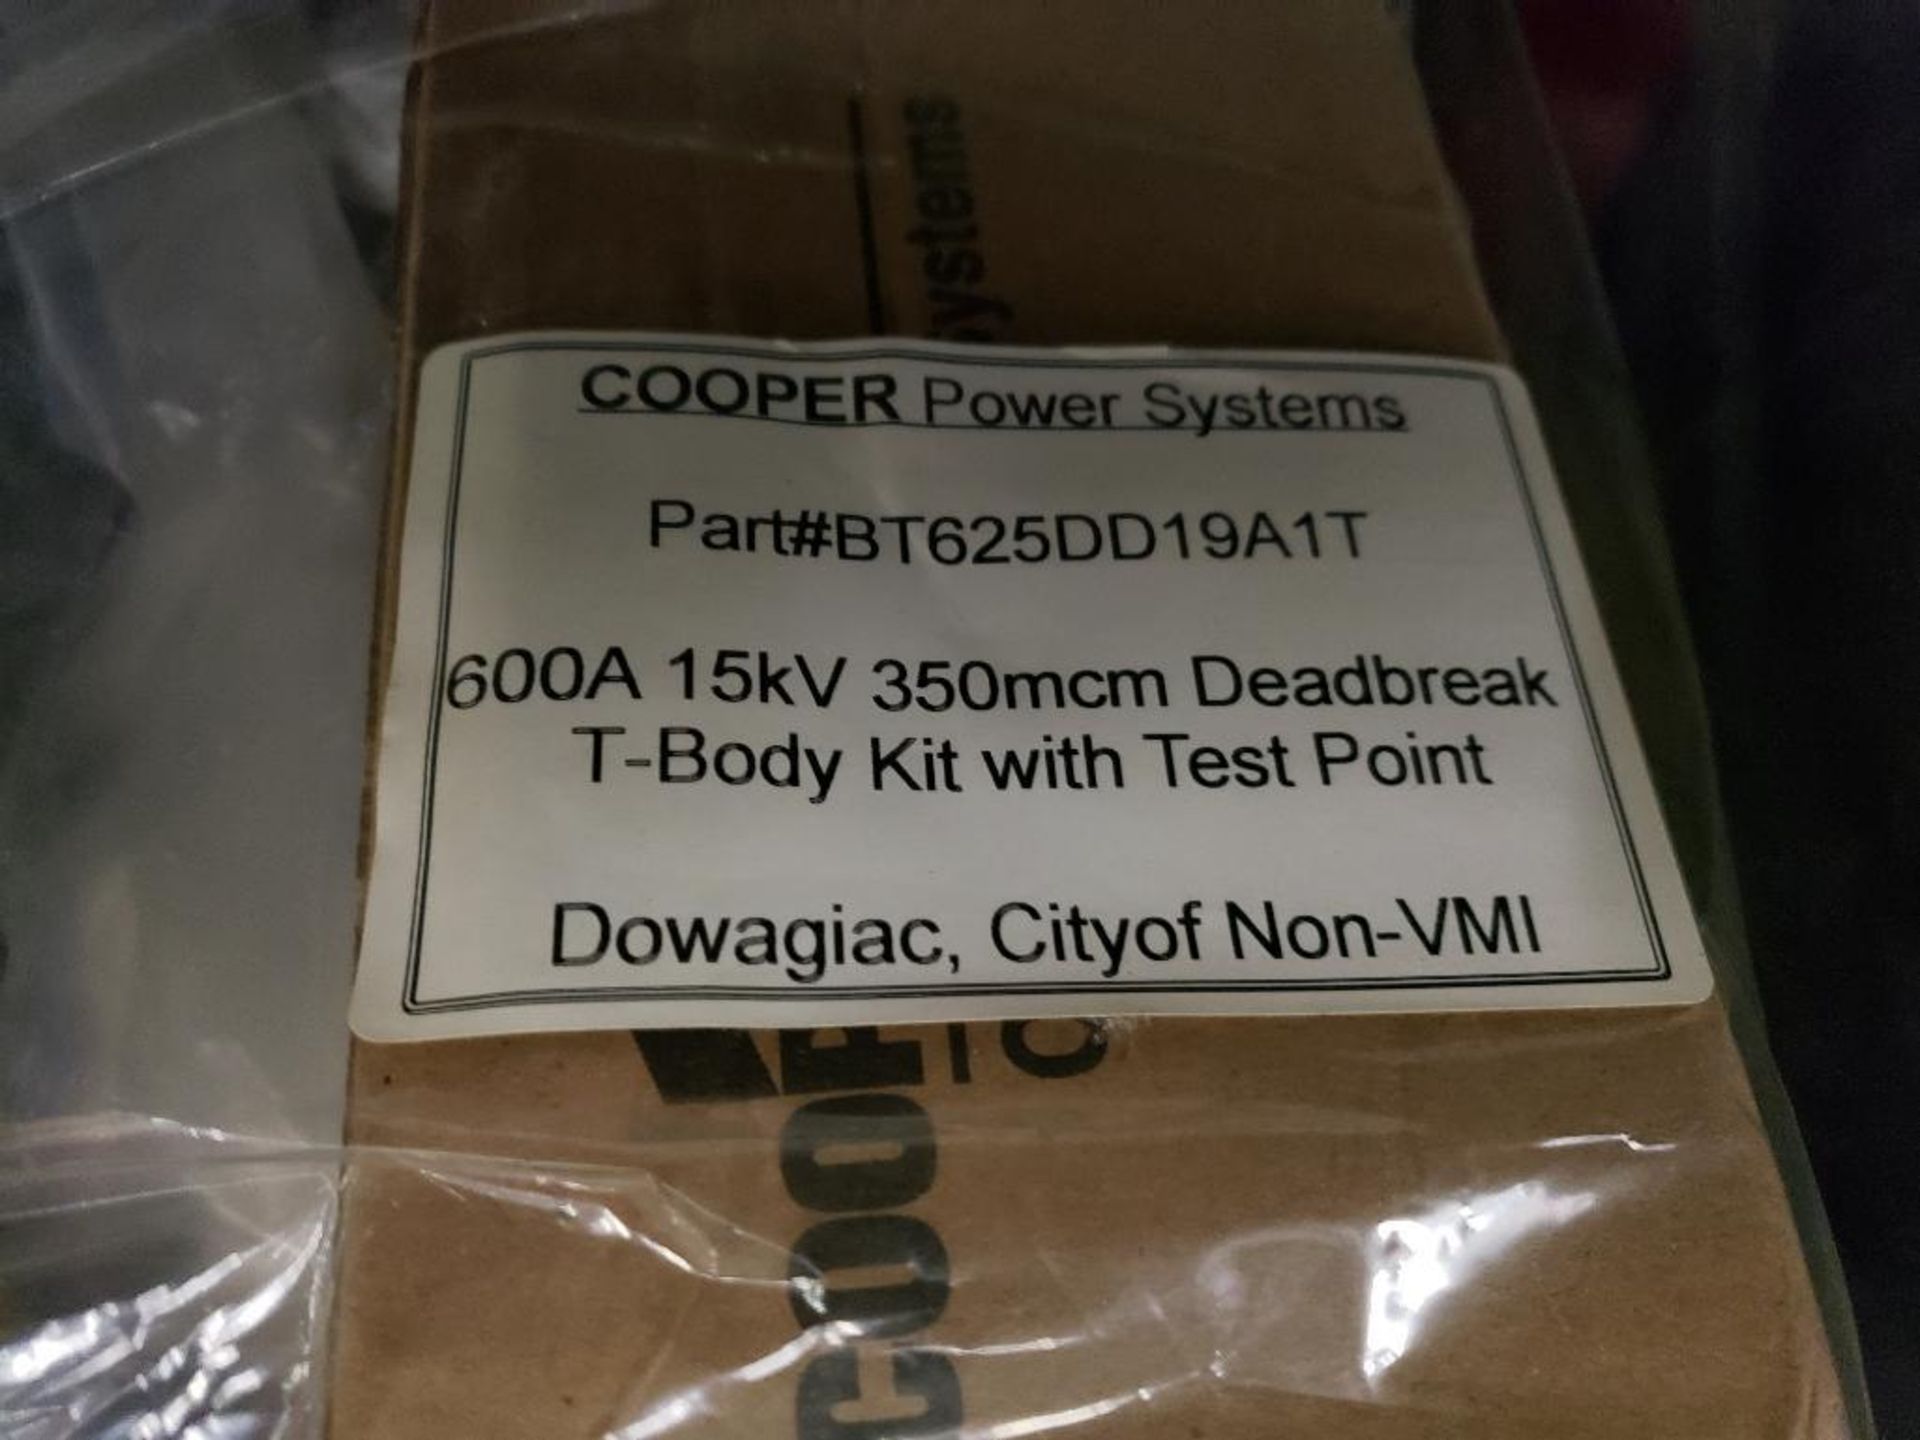 Qty 6 - Cooper Power 350mcm deadbreak kit. Part number BT625DD19A1T. - Image 2 of 6